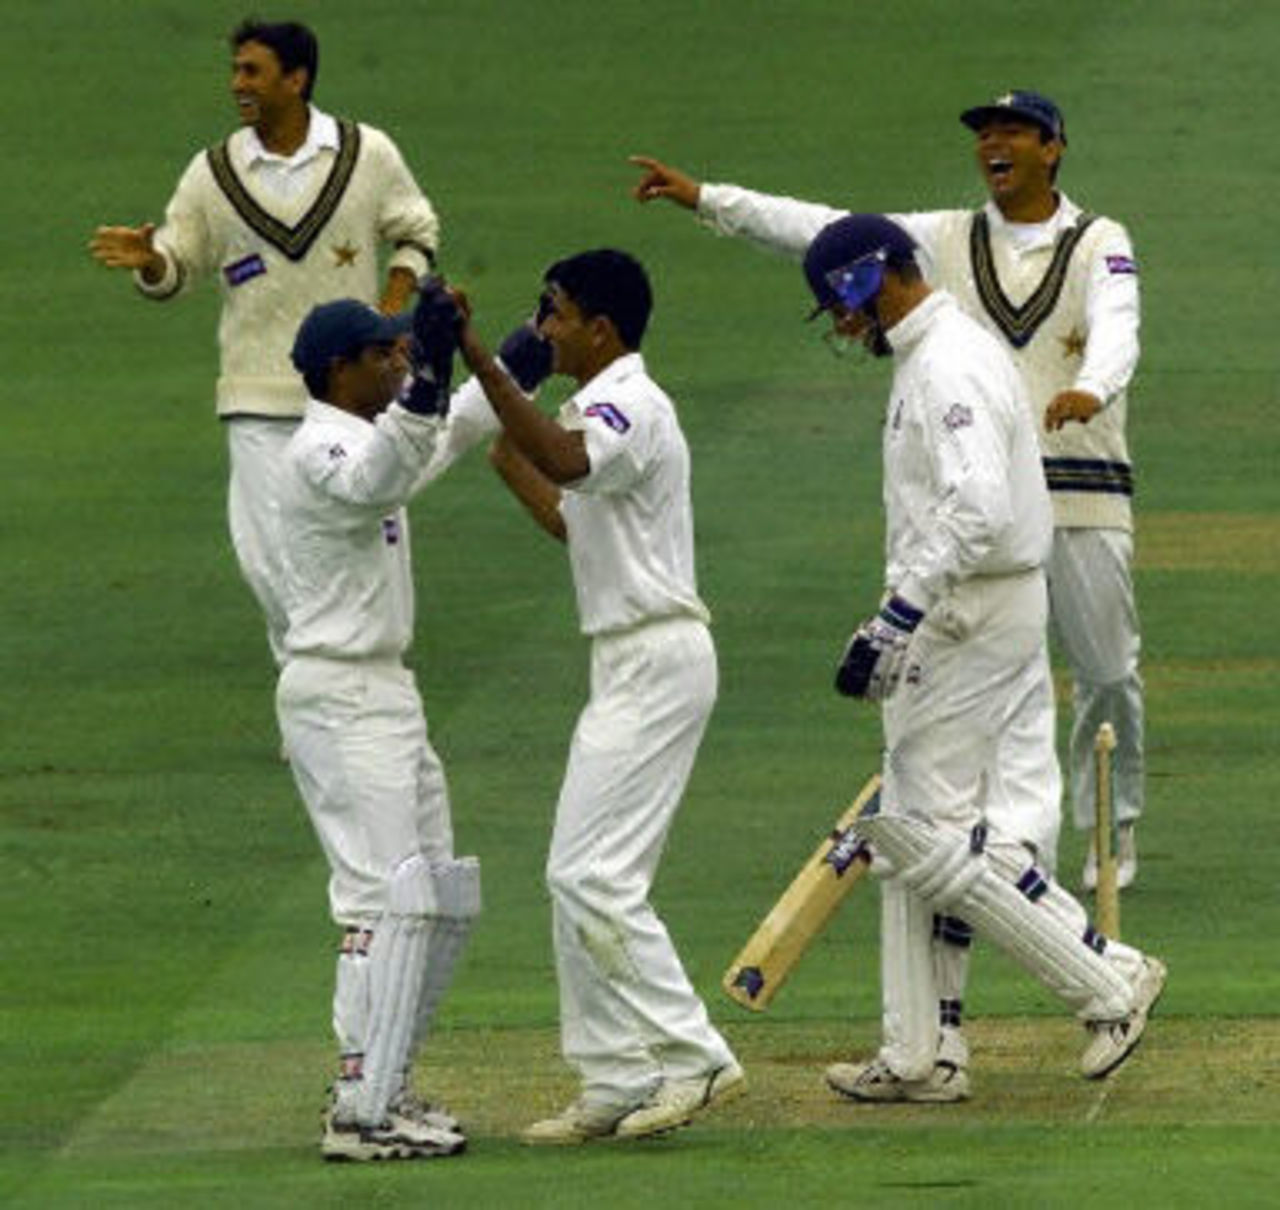 Rashid Latif congratulates Abdur Razzaq, day 2, 1st Test at Lord's, 17-21 May 2001.